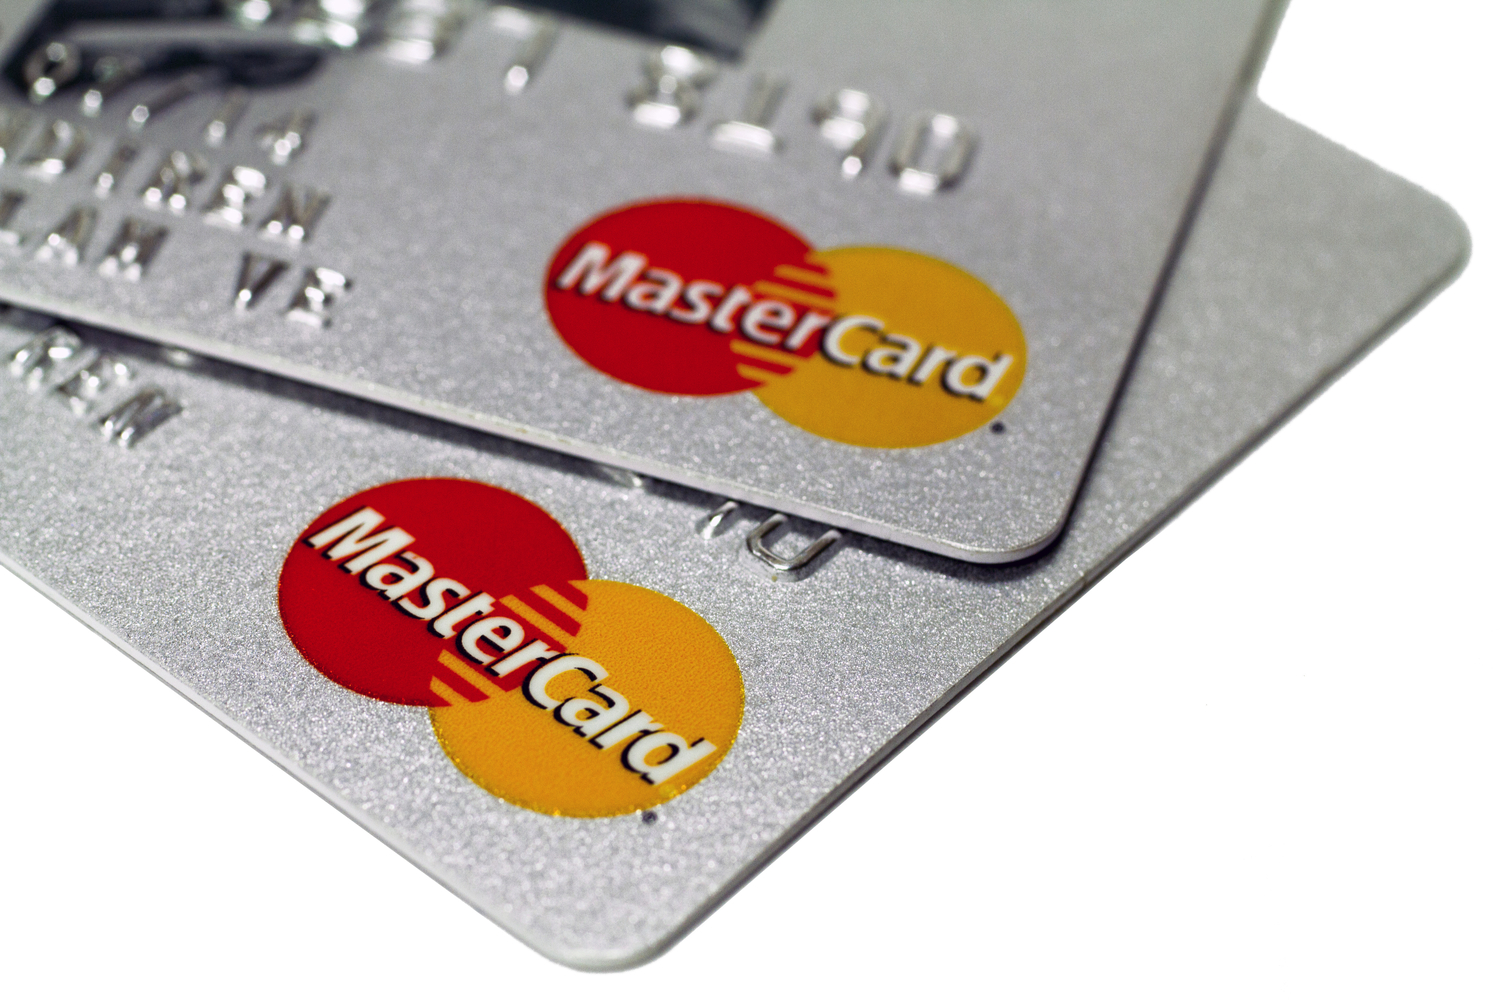 Mastercard-releases-platform-enabling-central-banks-to-test-digital-currencies